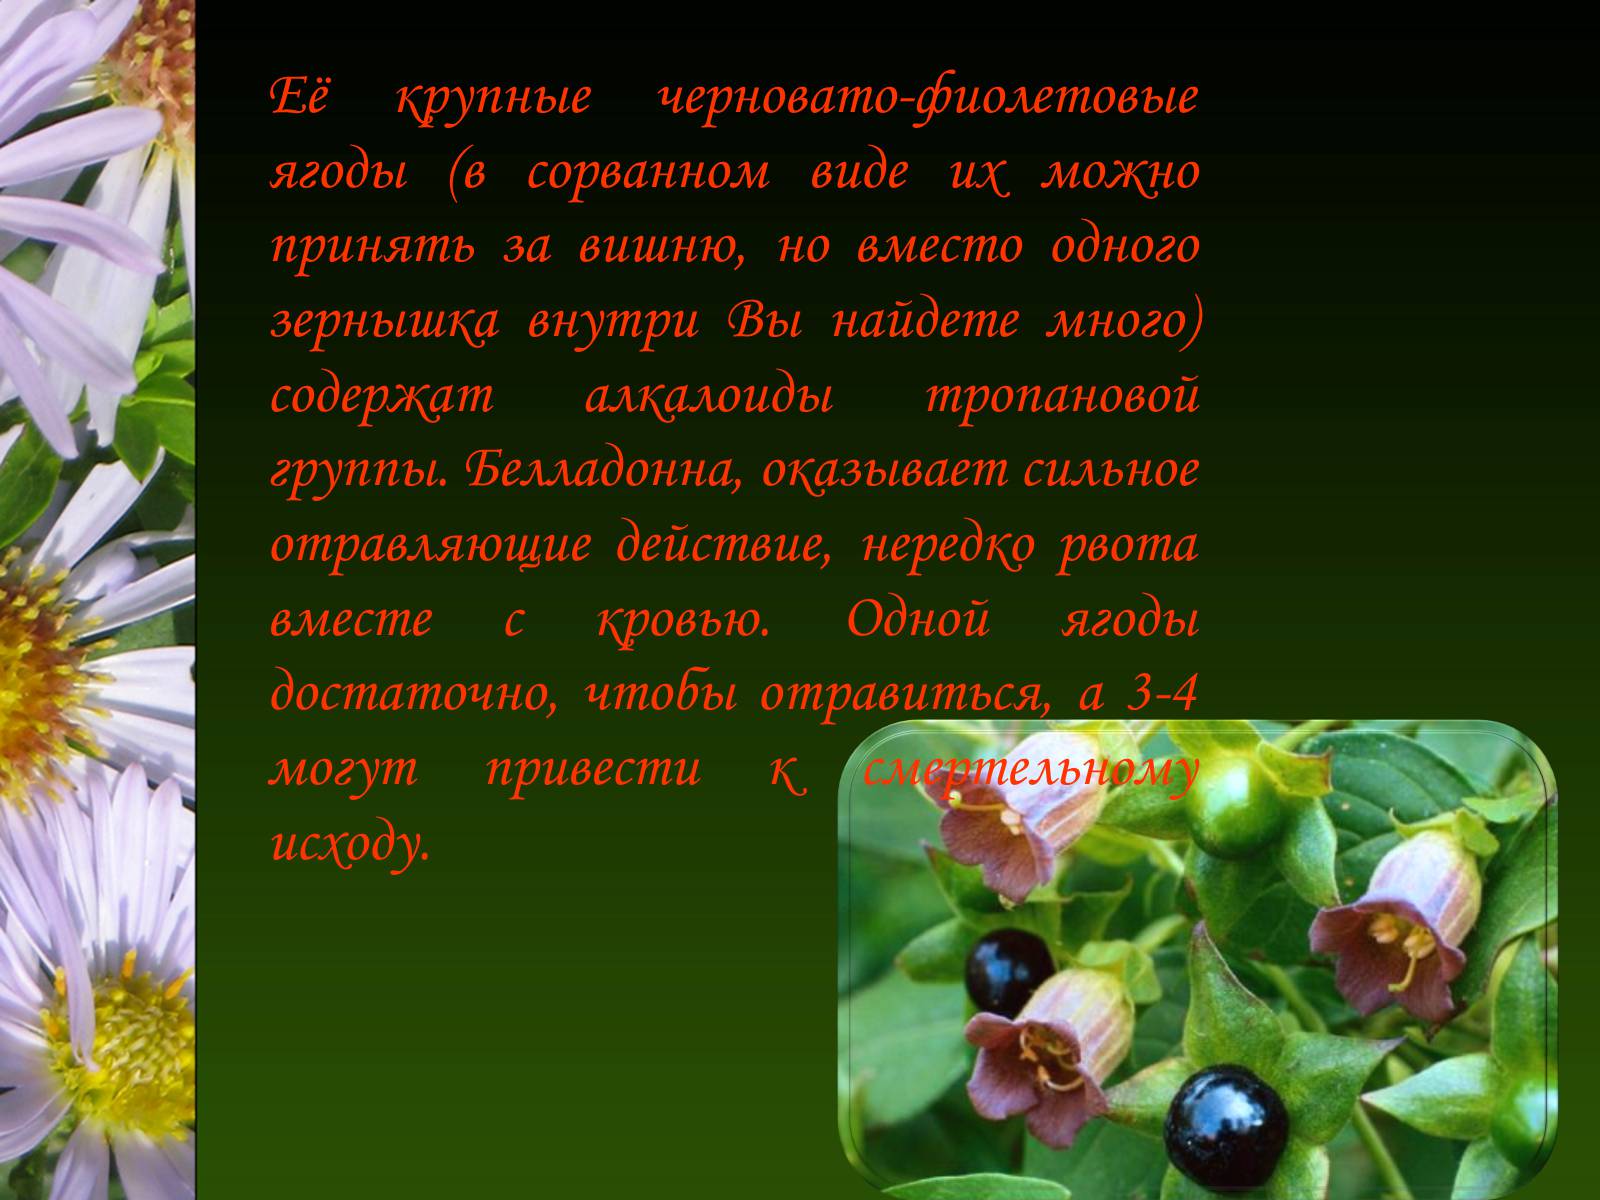 Презентація на тему «Ядовитые растения Украины» - Слайд #22